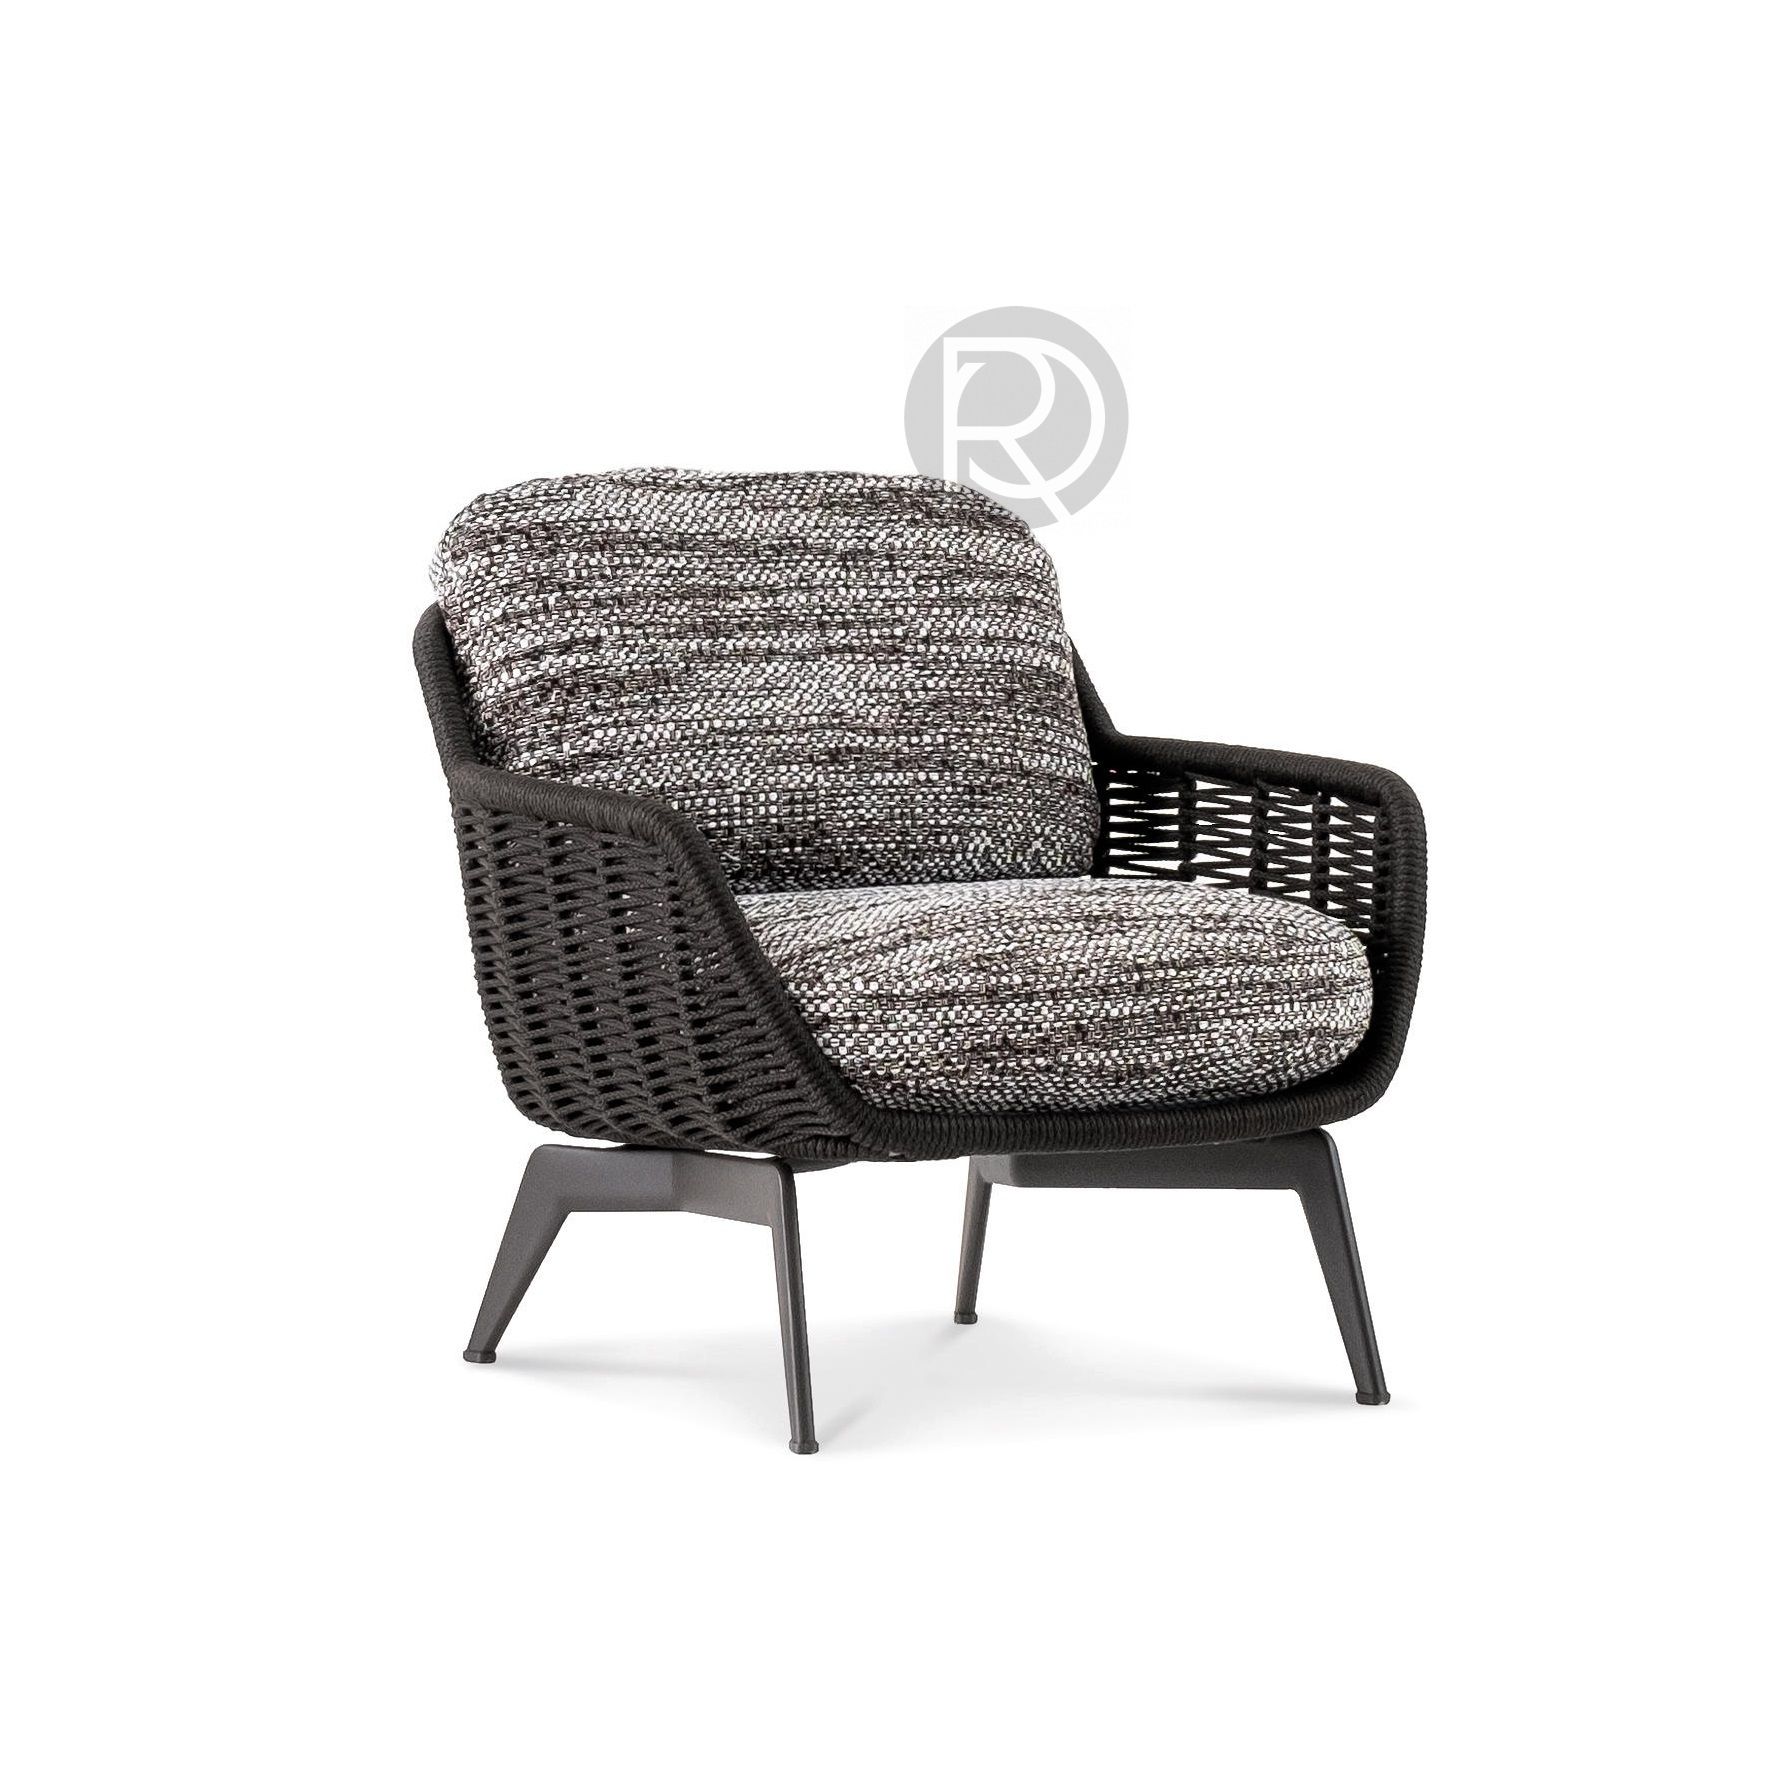 Outdoor chair BELT by Minotti